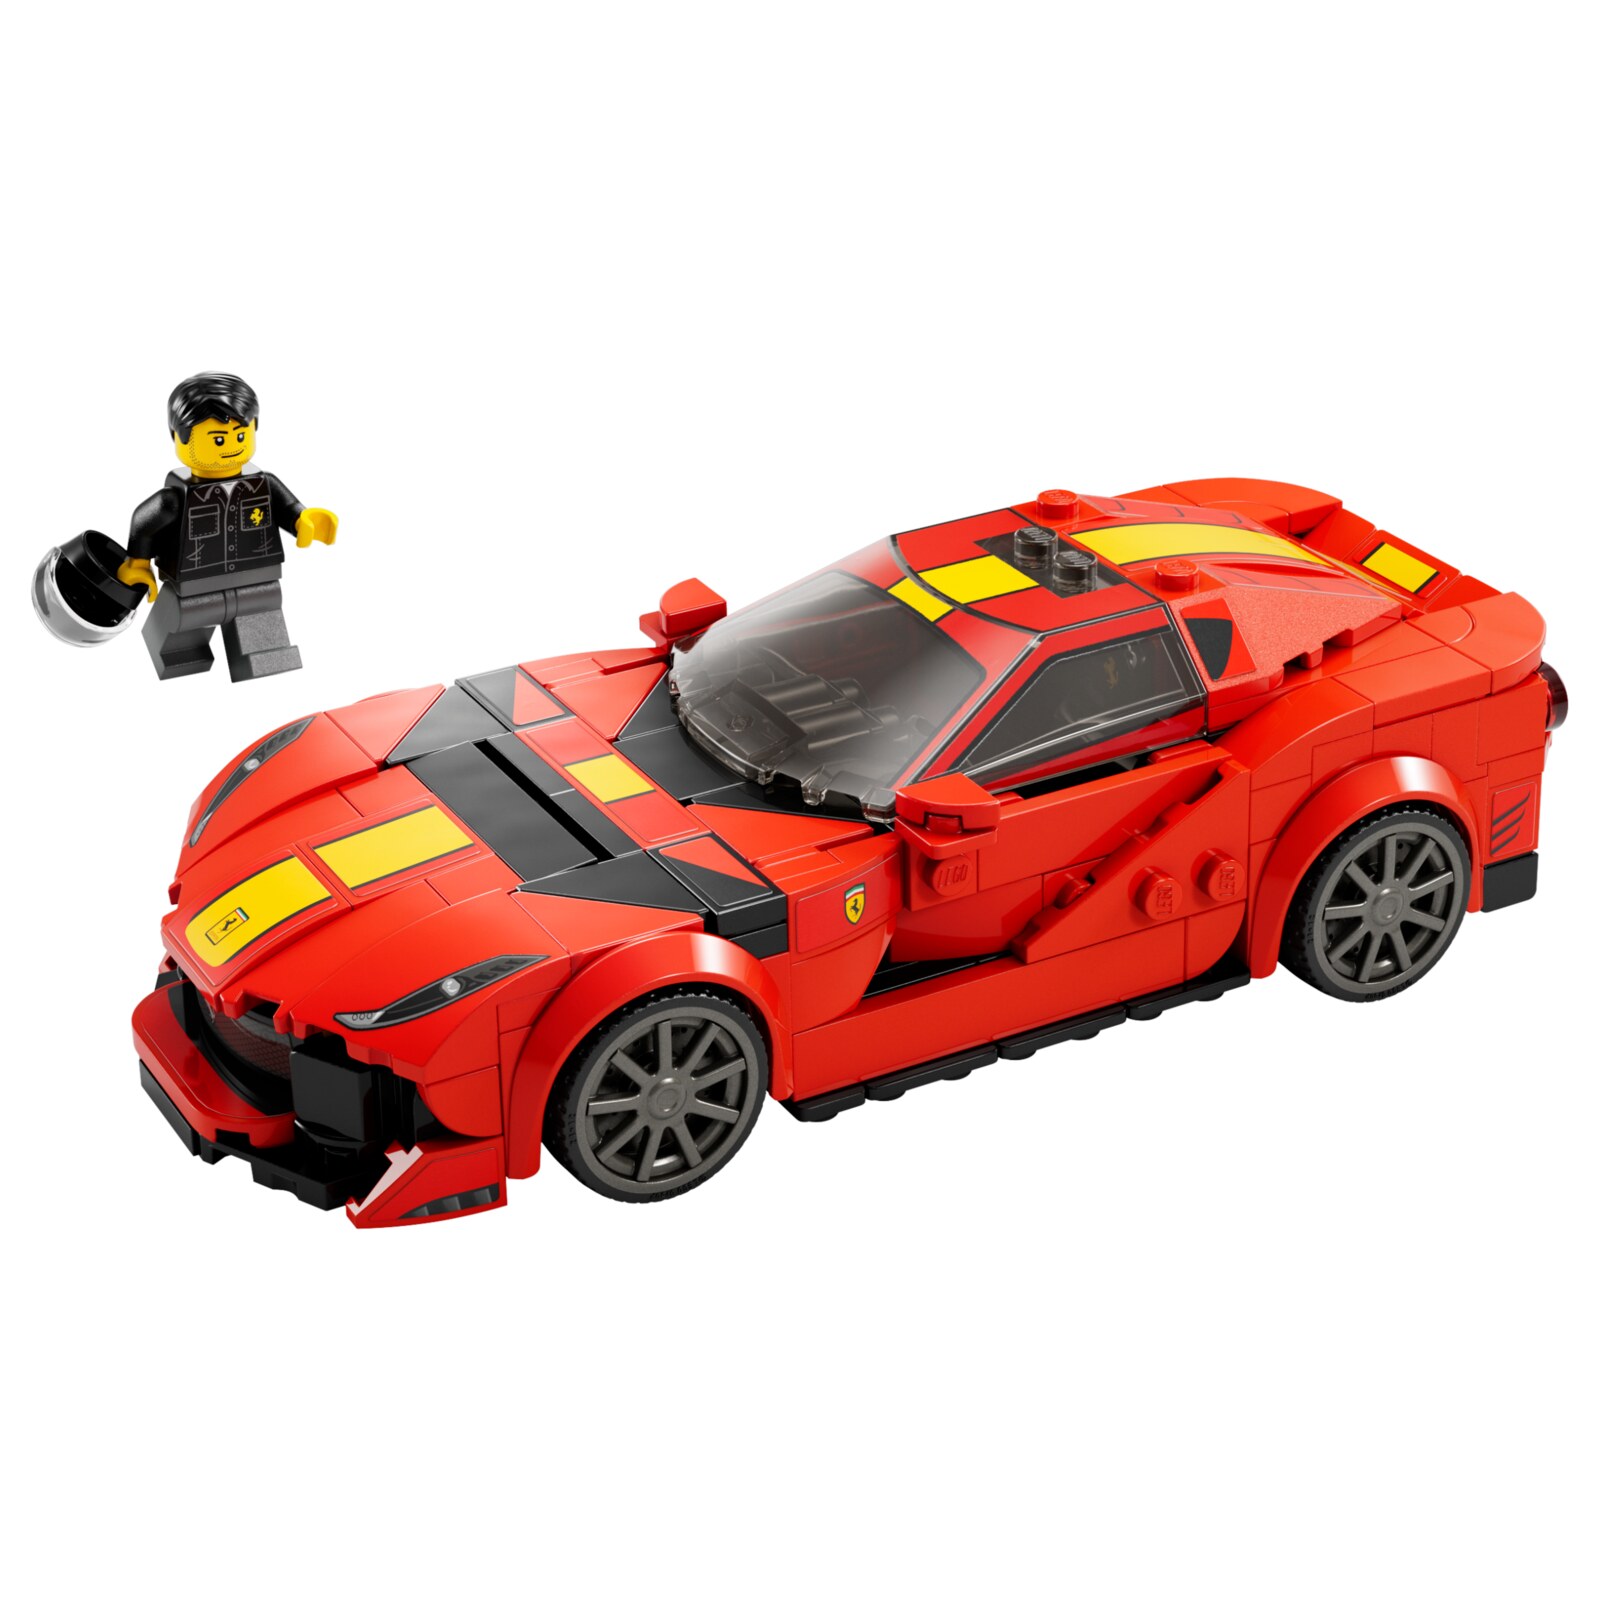 Конструктор LEGO Speed Champions Ferrari 812 Competizione, 261 деталь, 76914